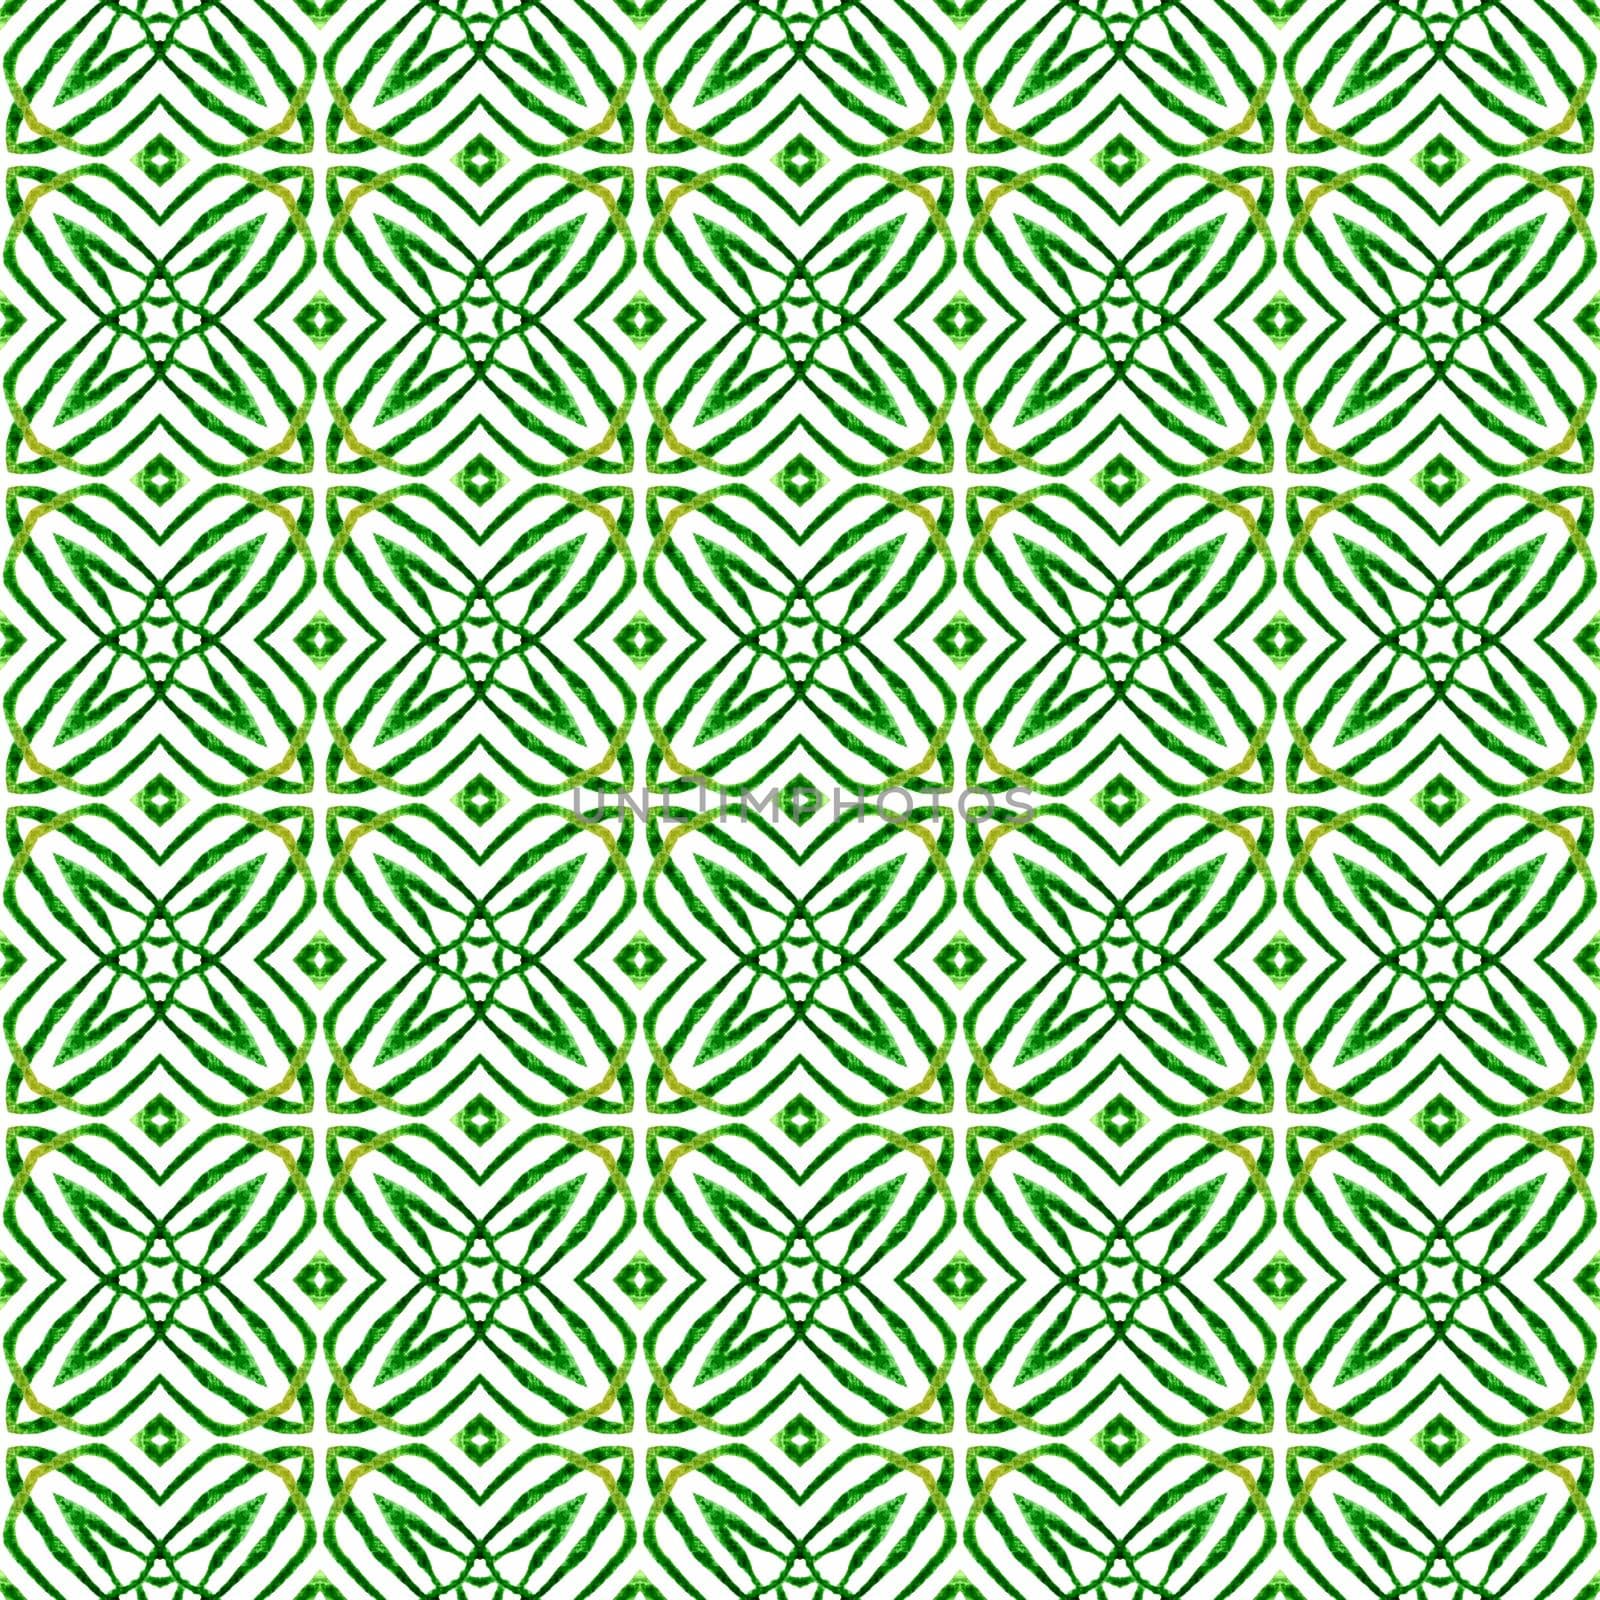 Textile ready beautiful print, swimwear fabric, wallpaper, wrapping. Green great boho chic summer design. Green geometric chevron watercolor border. Chevron watercolor pattern.